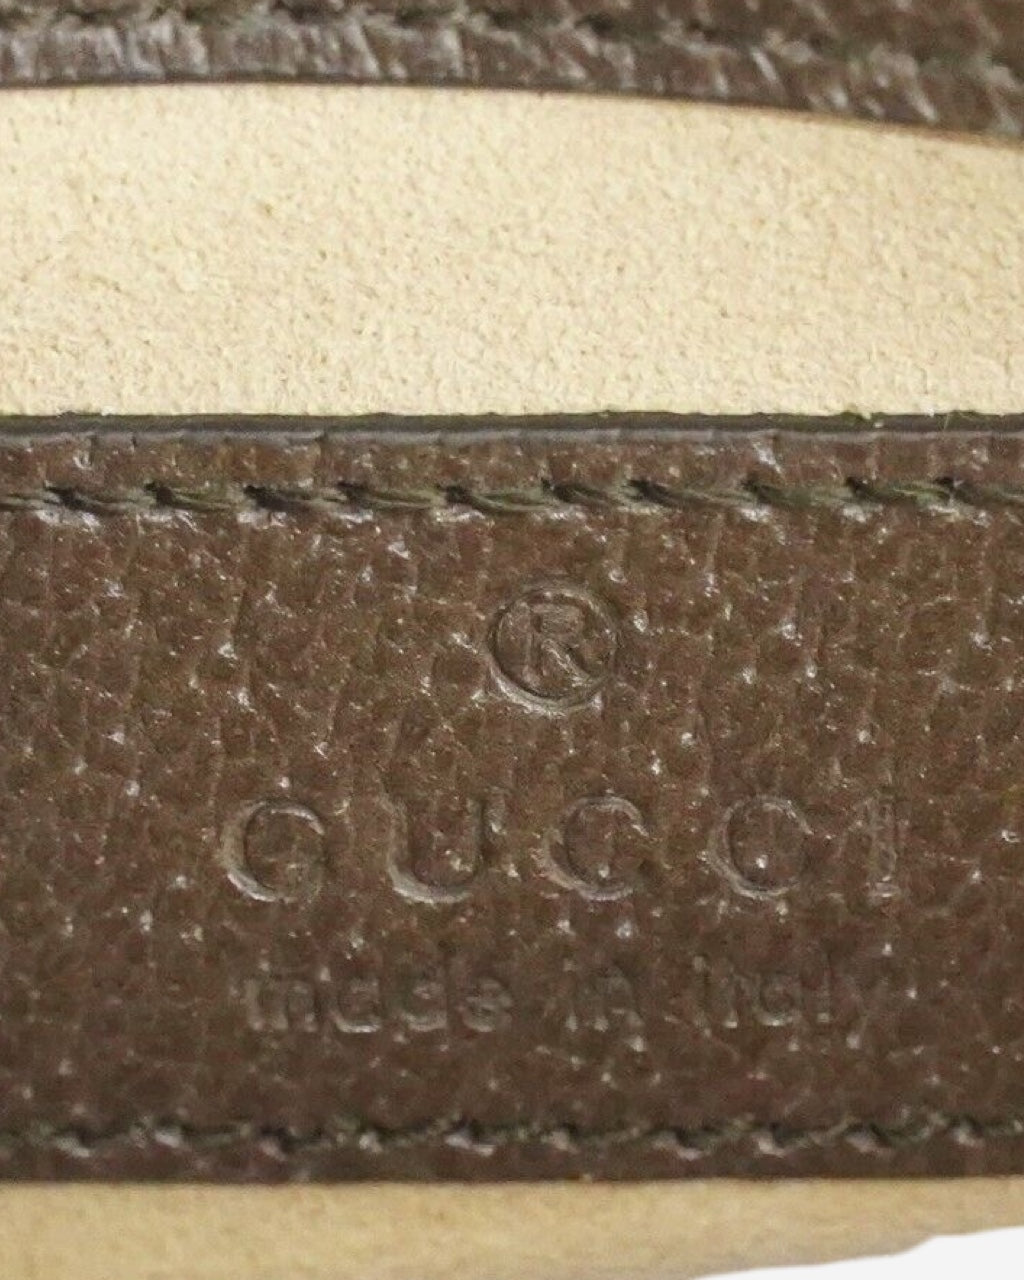 Gucci Dionysus Mini Bag